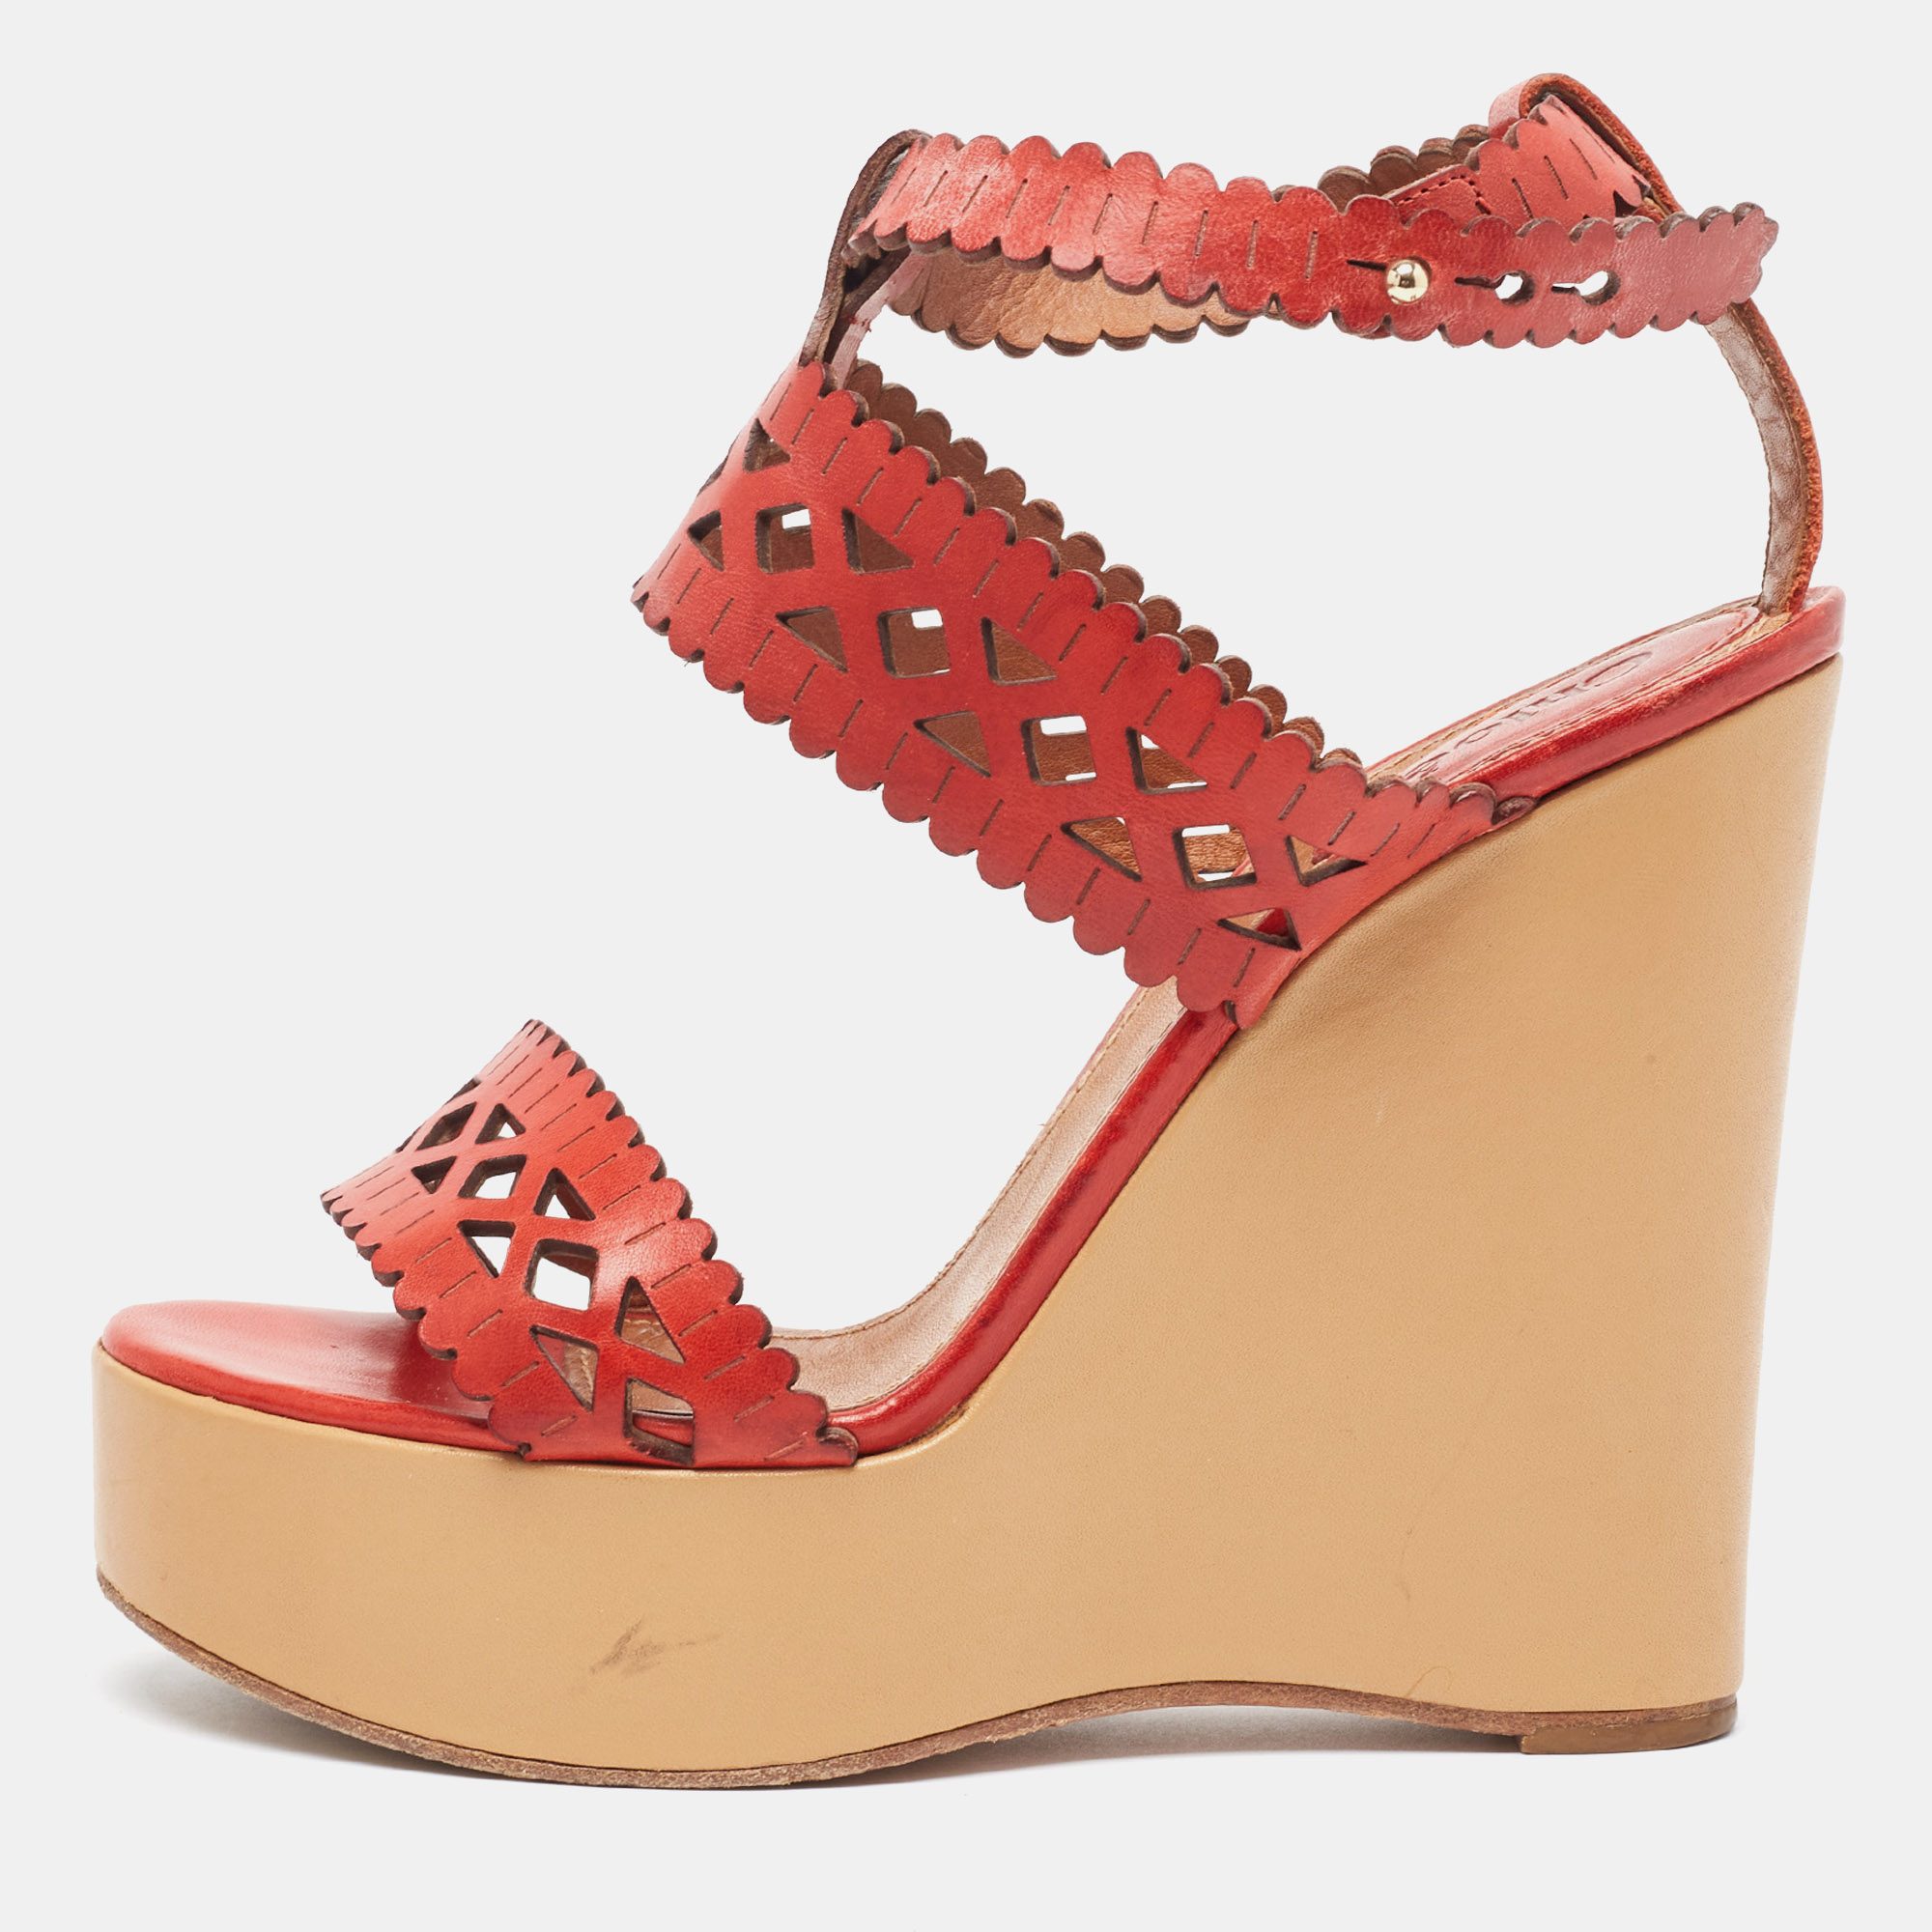 Chlo&eacute; red laser cut leather wedge platform ankle strap sandals size 37.5